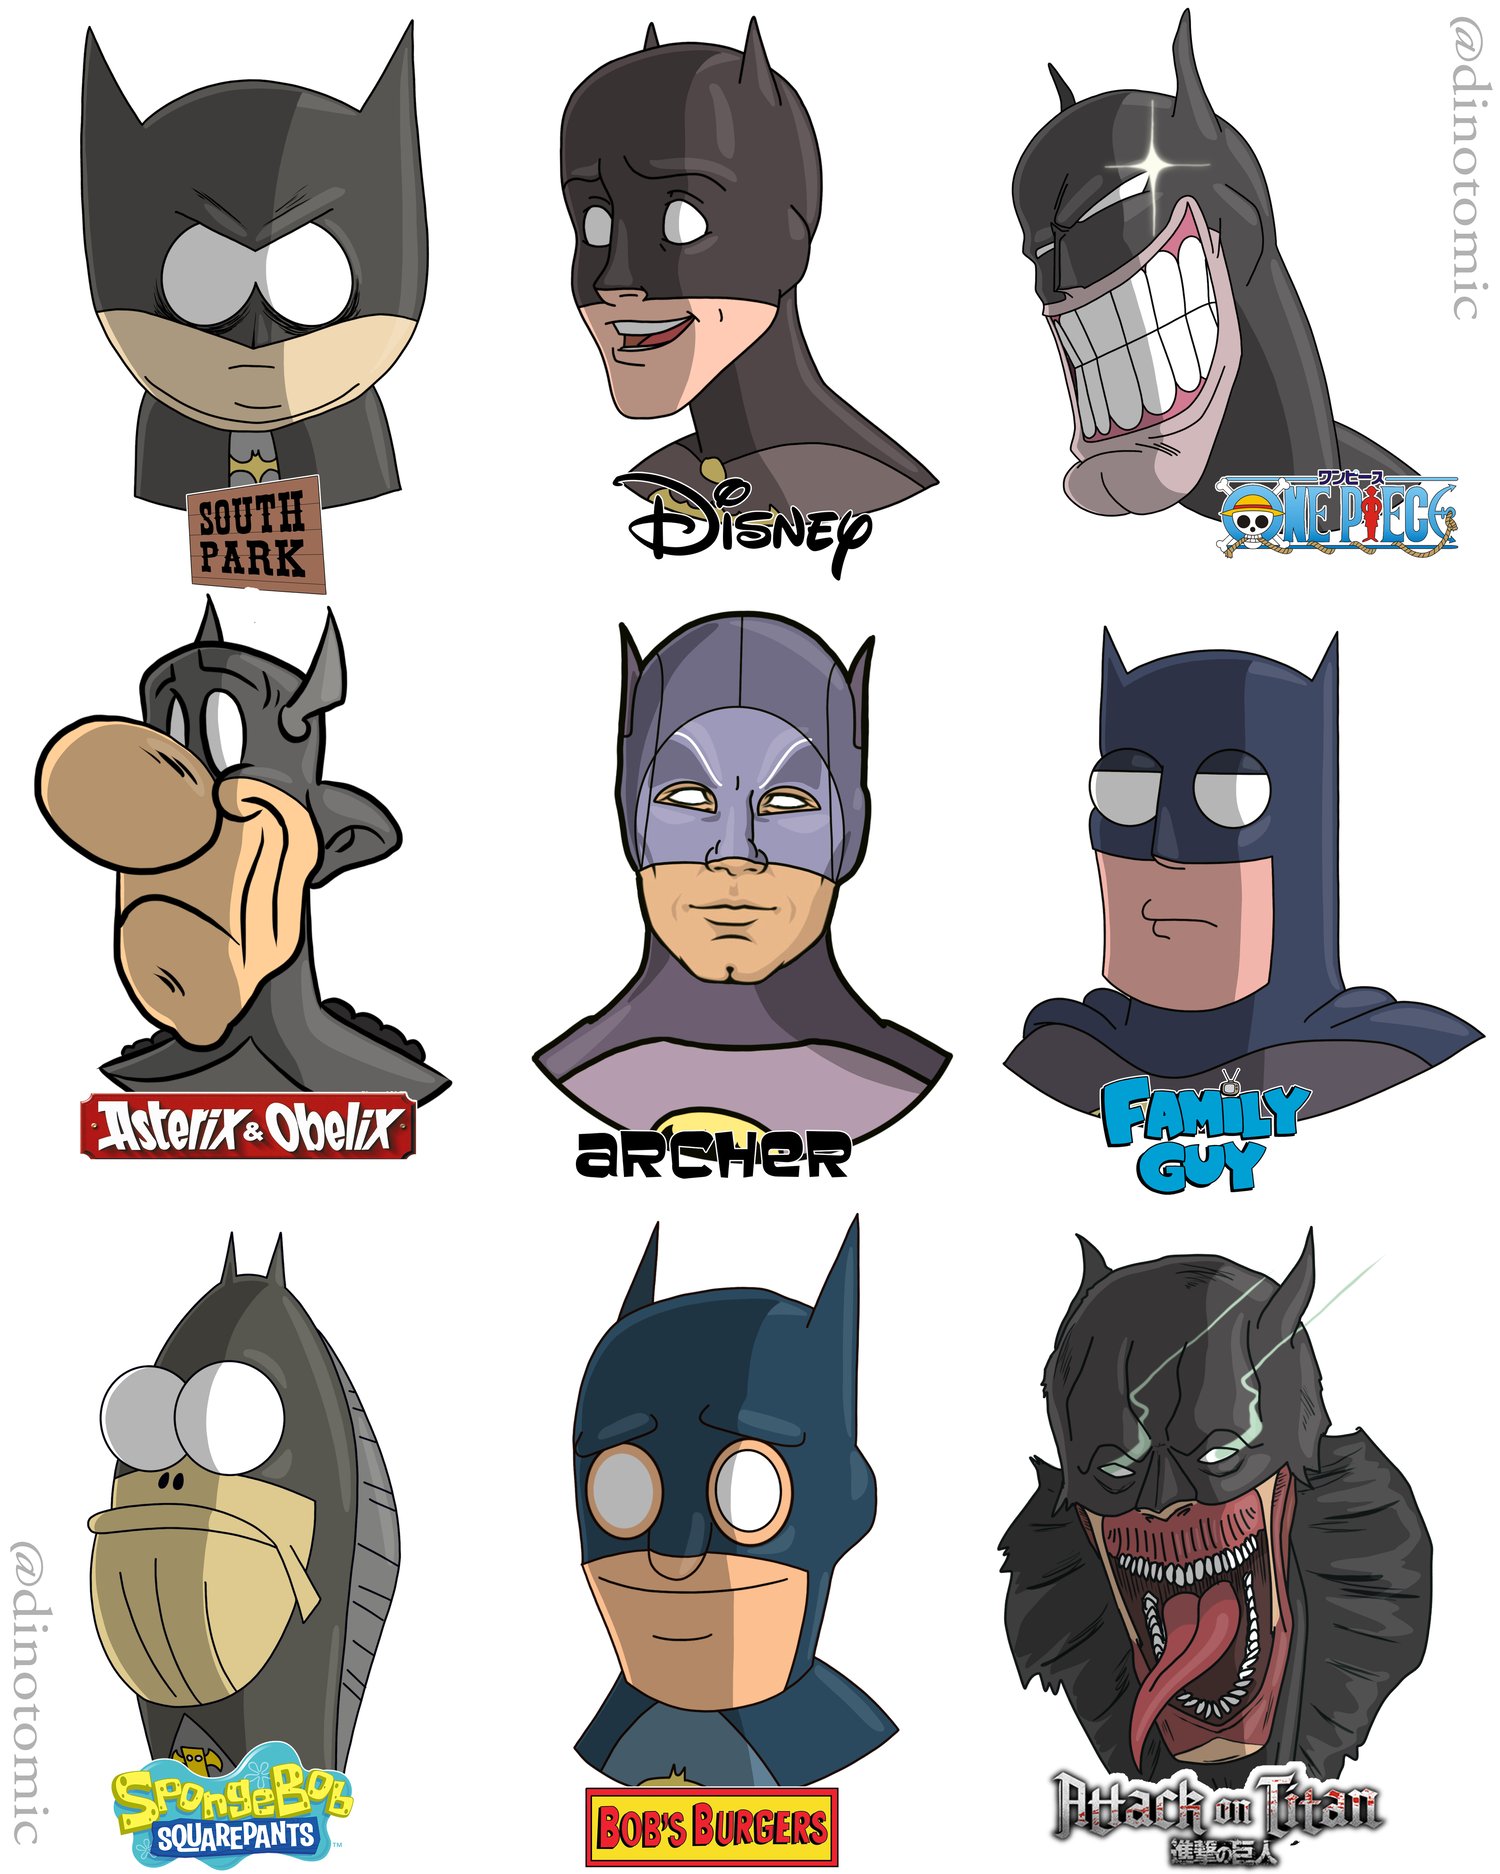 Image of #201 Batman VOL2 in many styles 